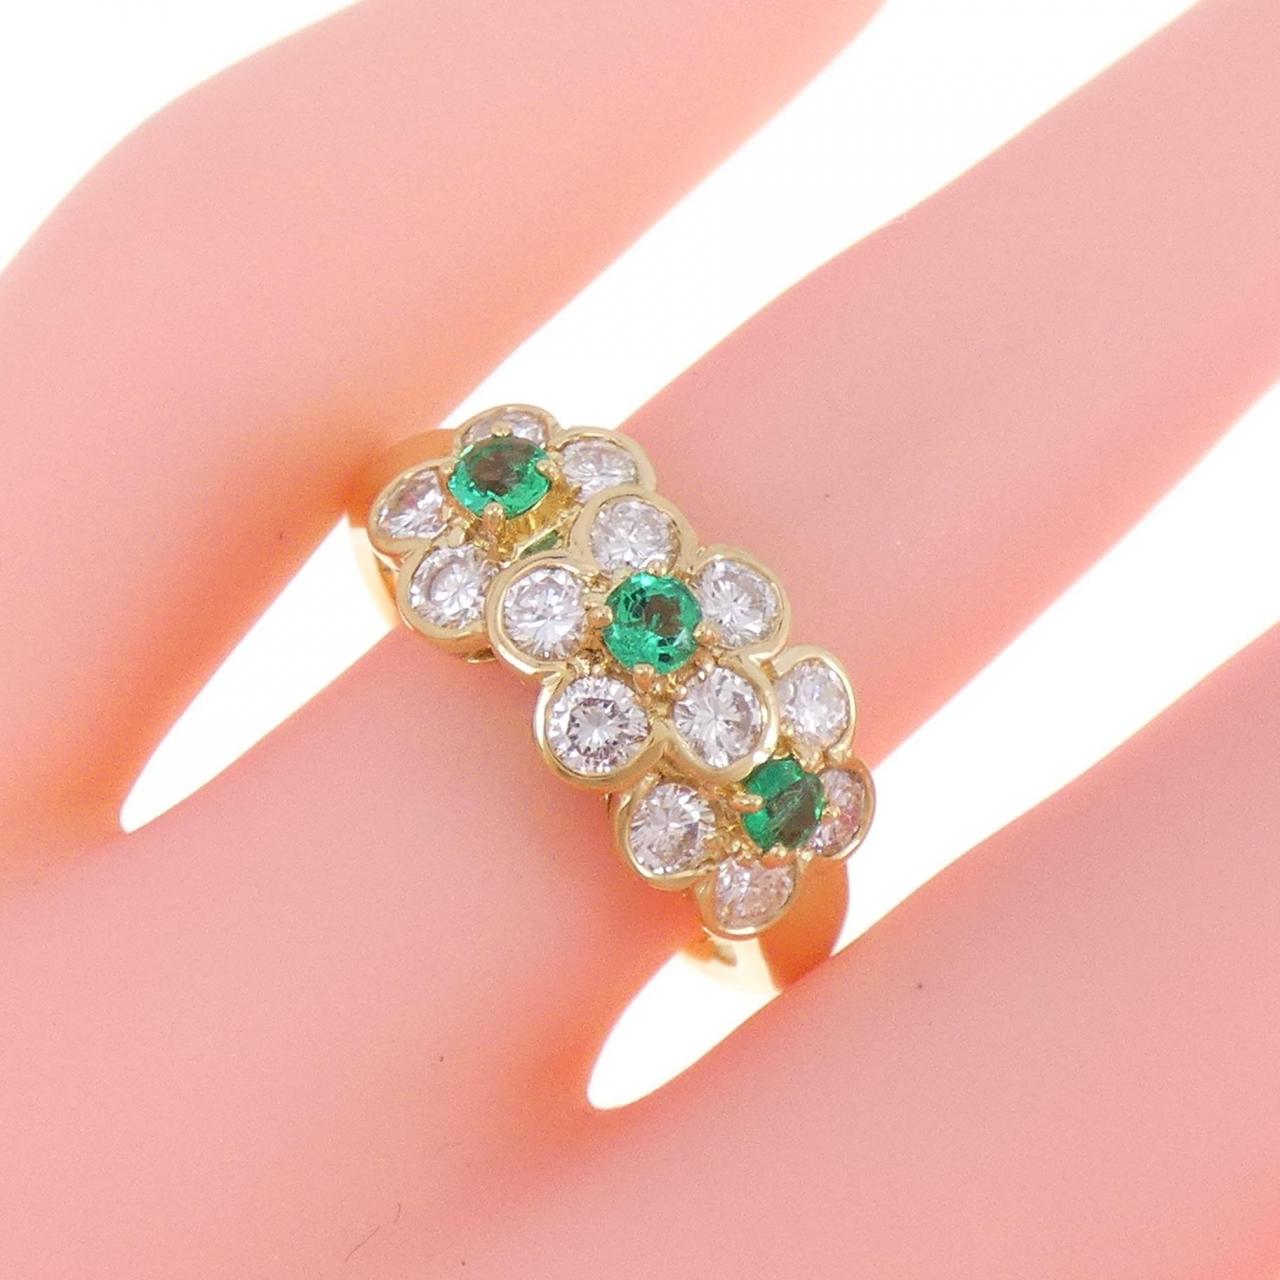 K18YG Flower Emerald Ring 0.28CT